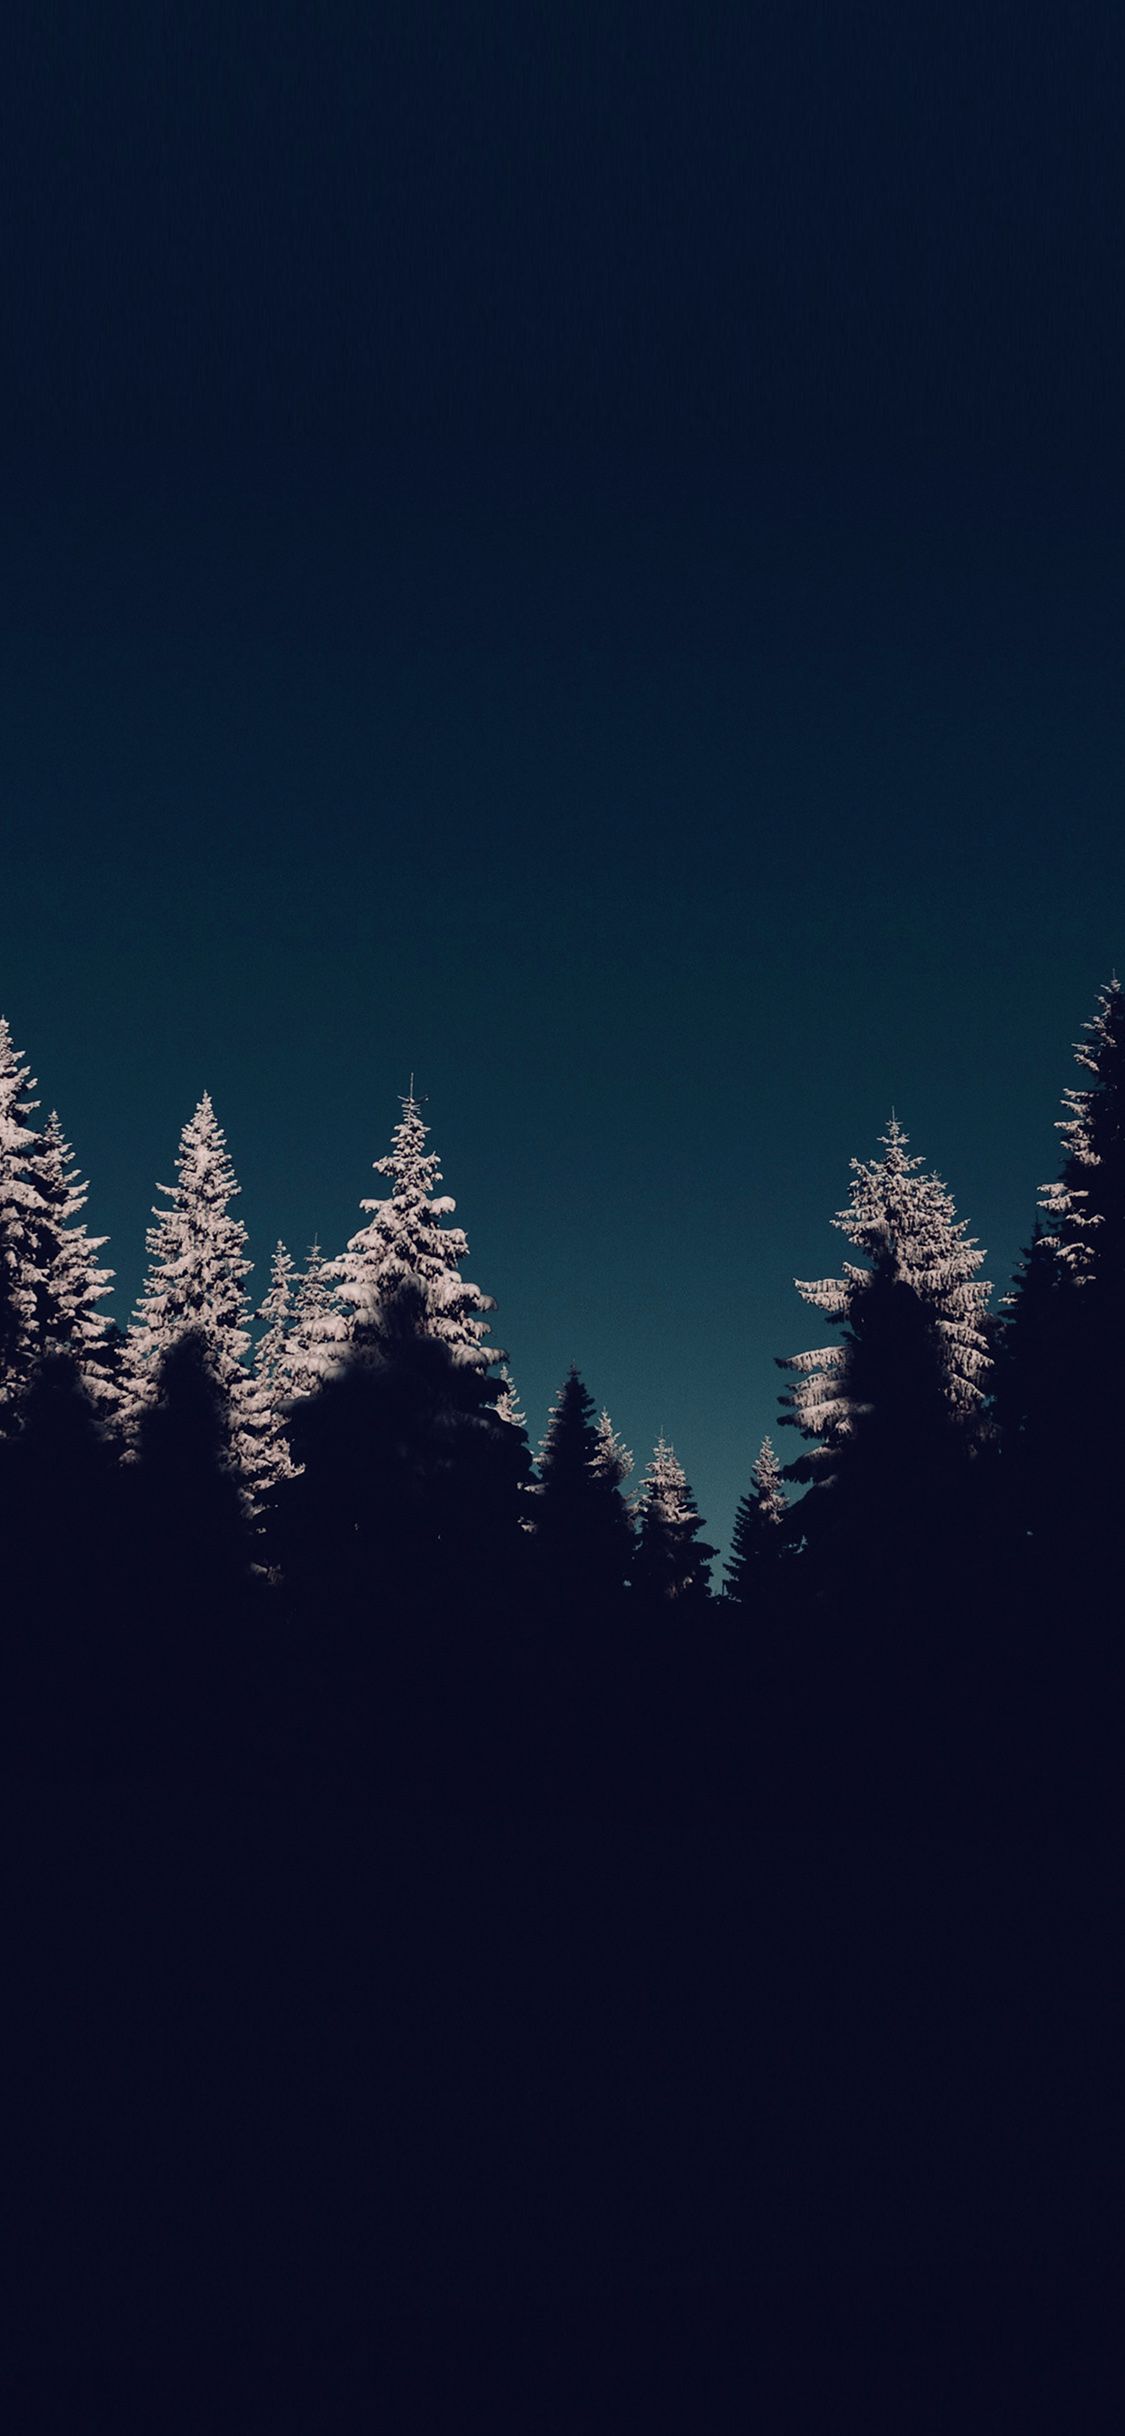 iPhone X wallpaper. wood winter night mountain blue dark